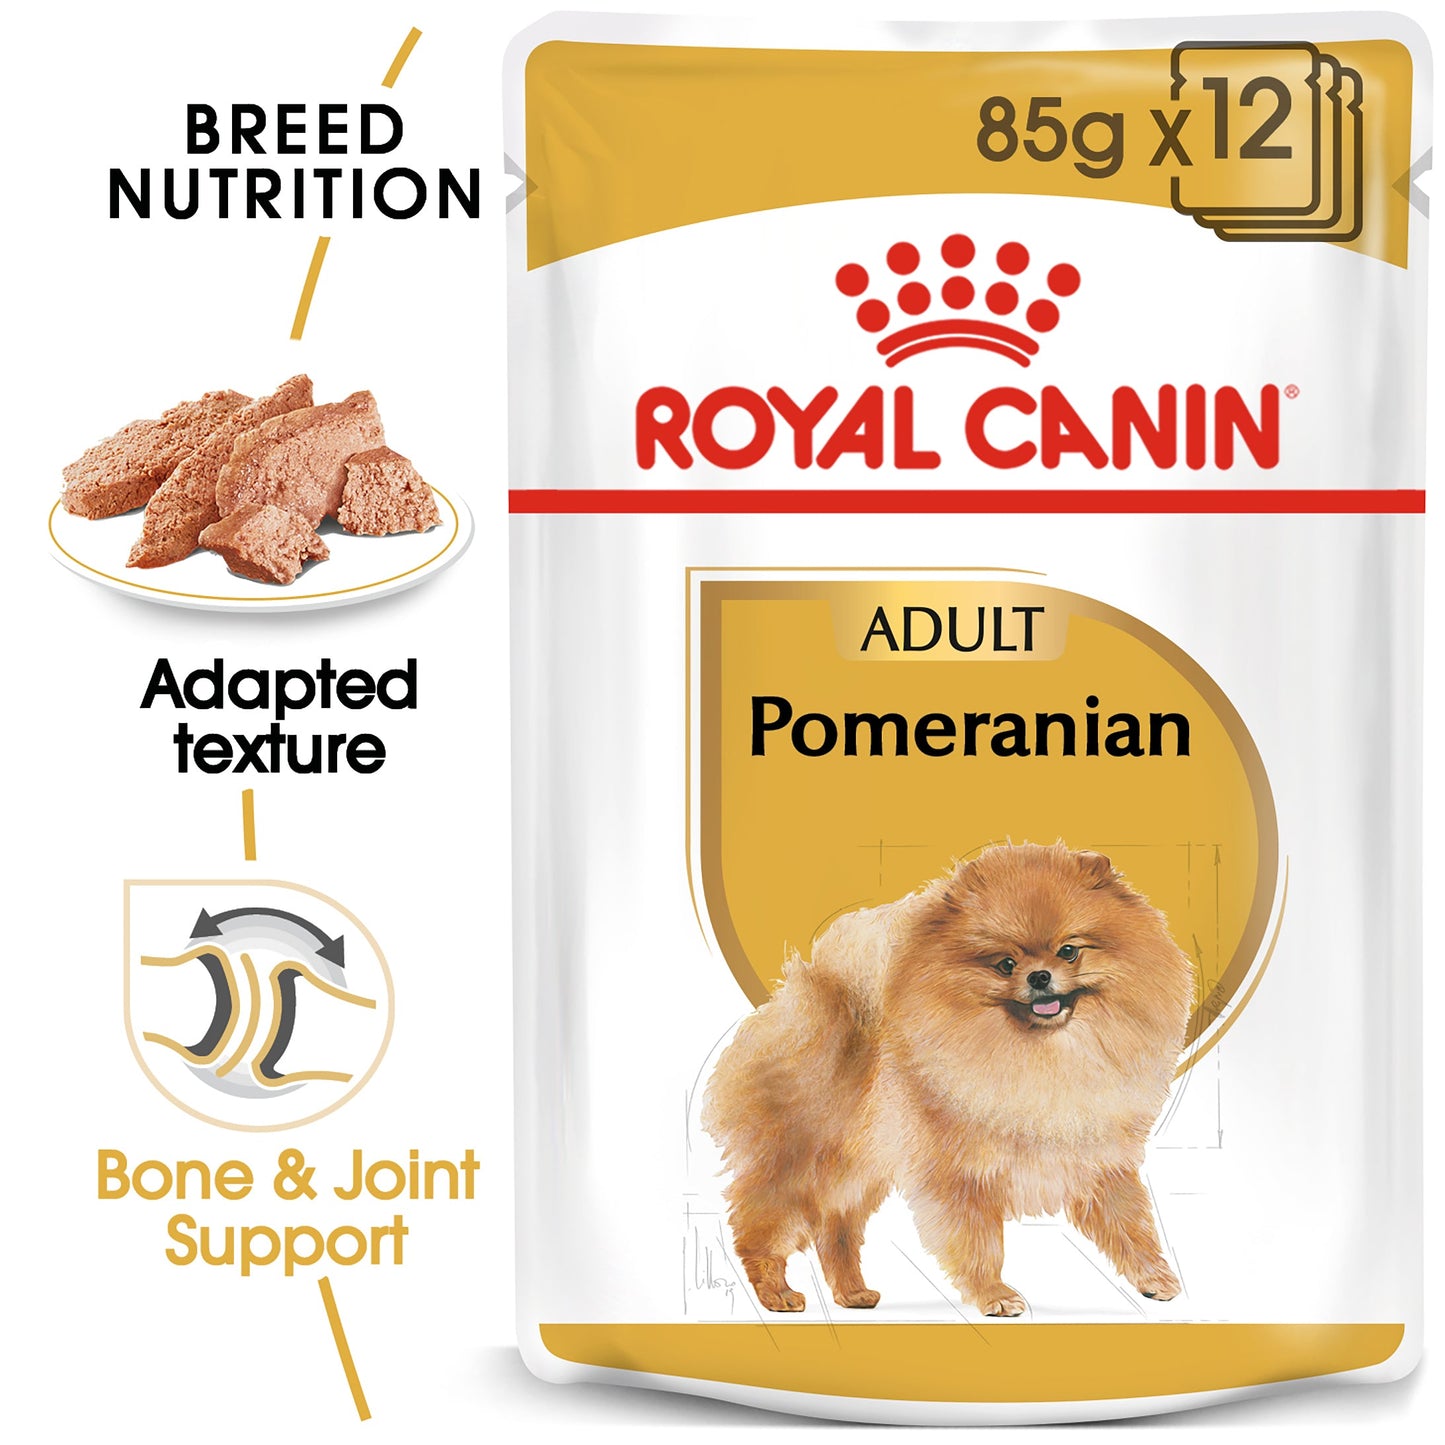 Royal Canin Pomeranian Wet Dog Food